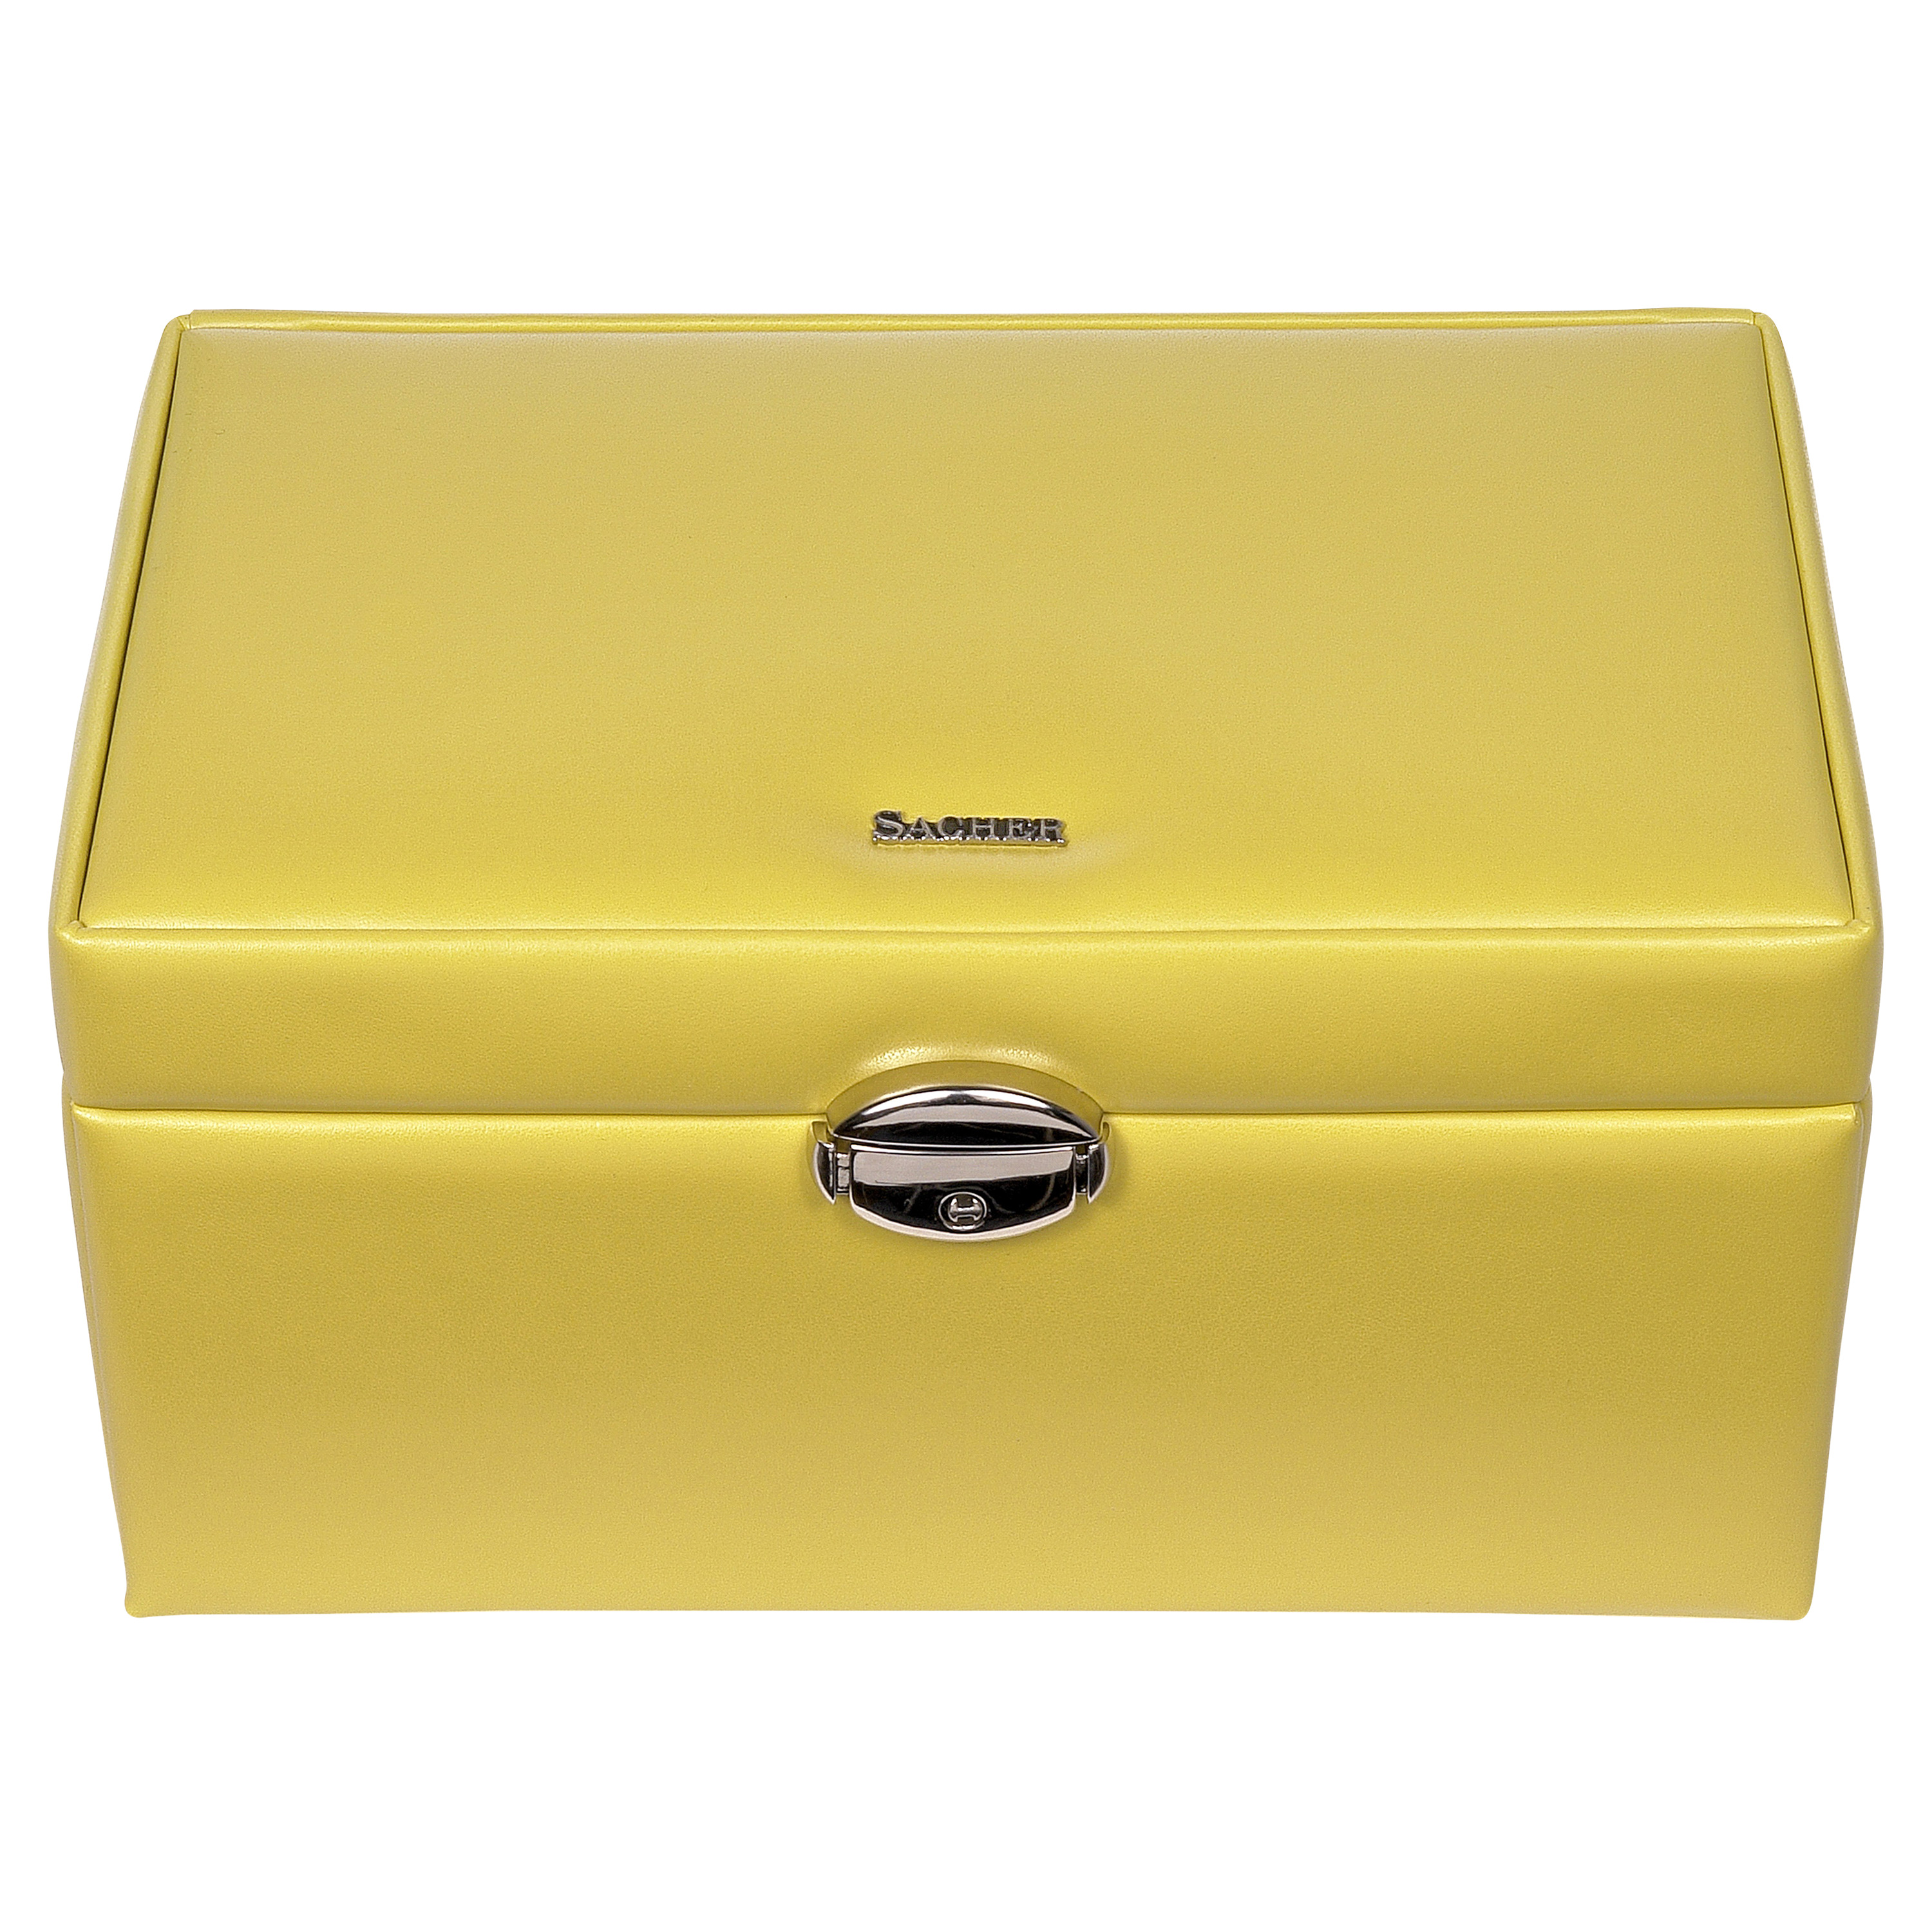 Jewellery box Elly coloranti / lemon